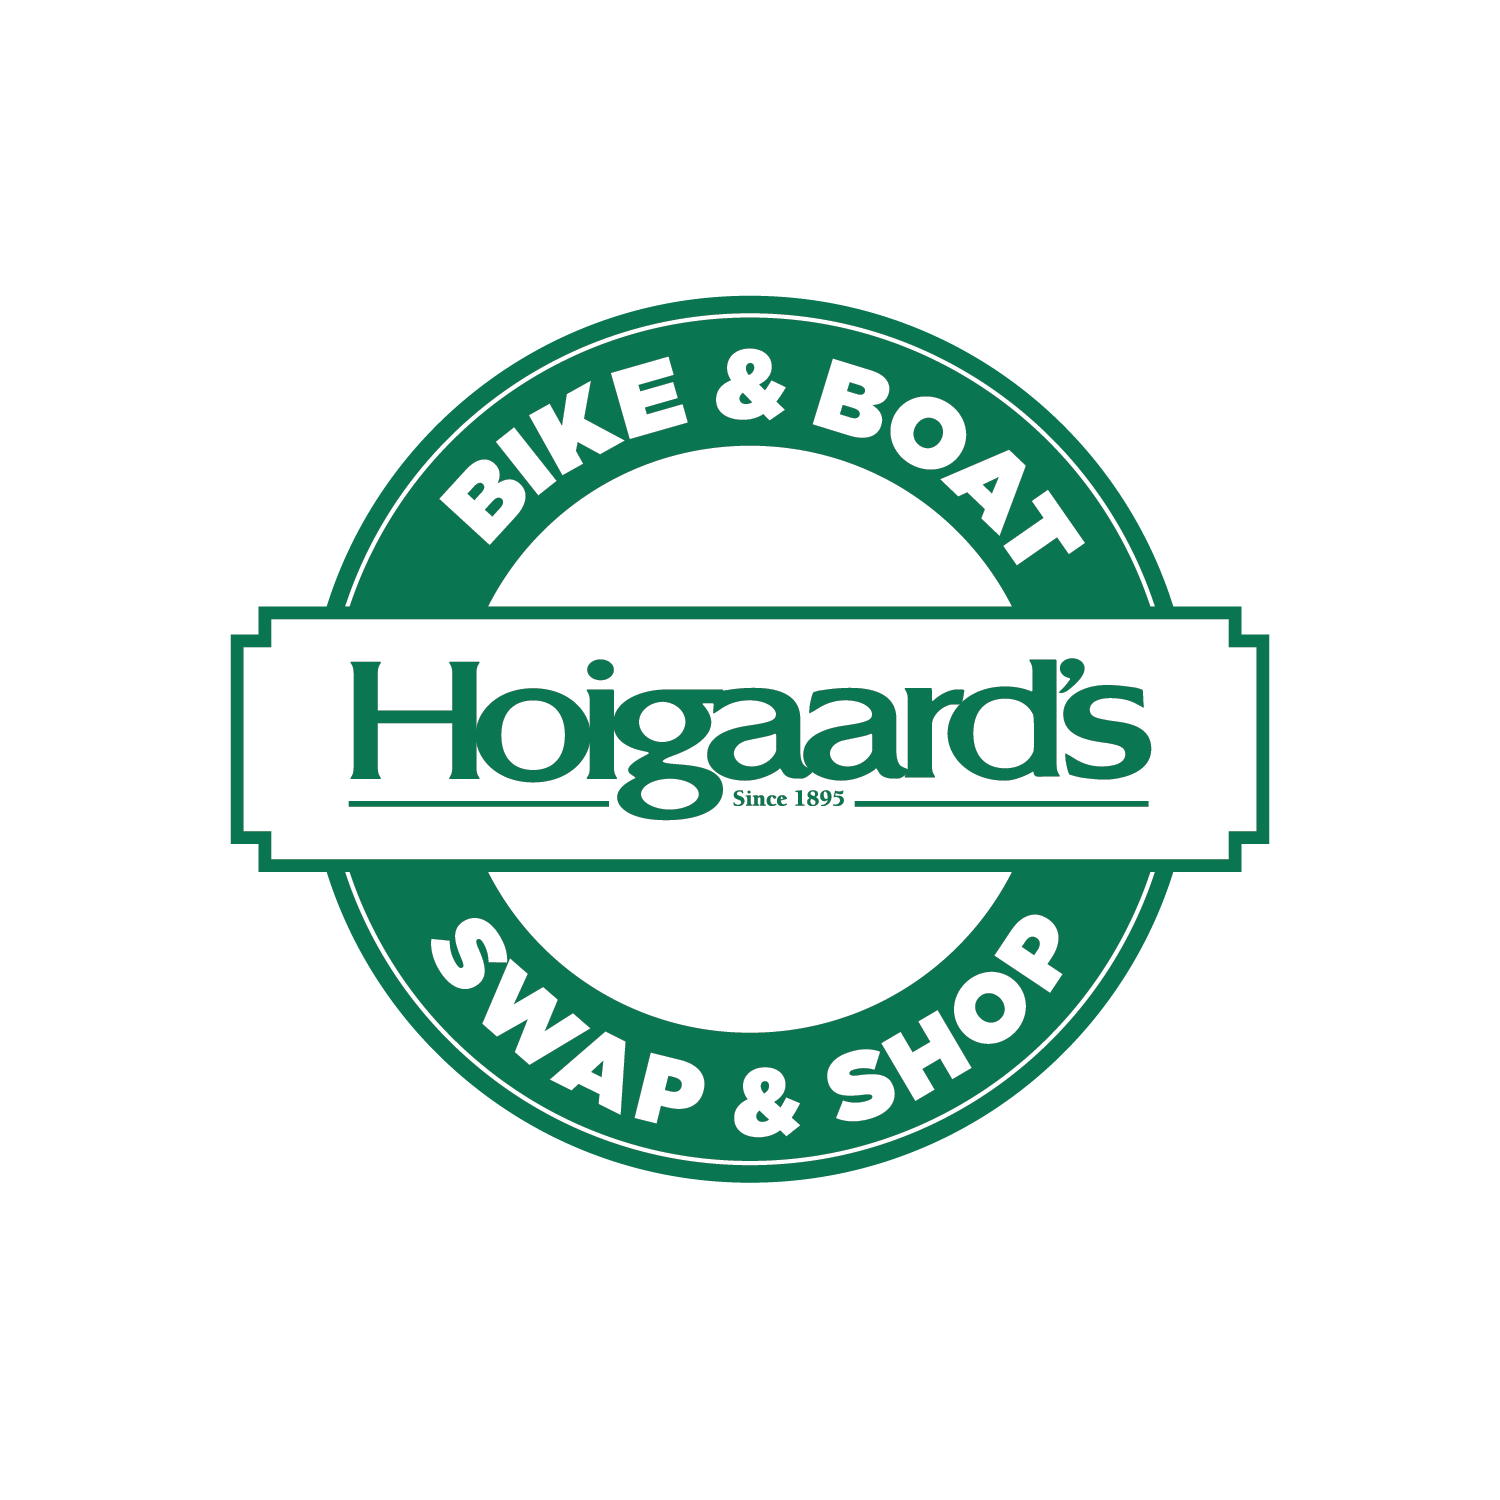 Hoigaards_Bike Boat Sale